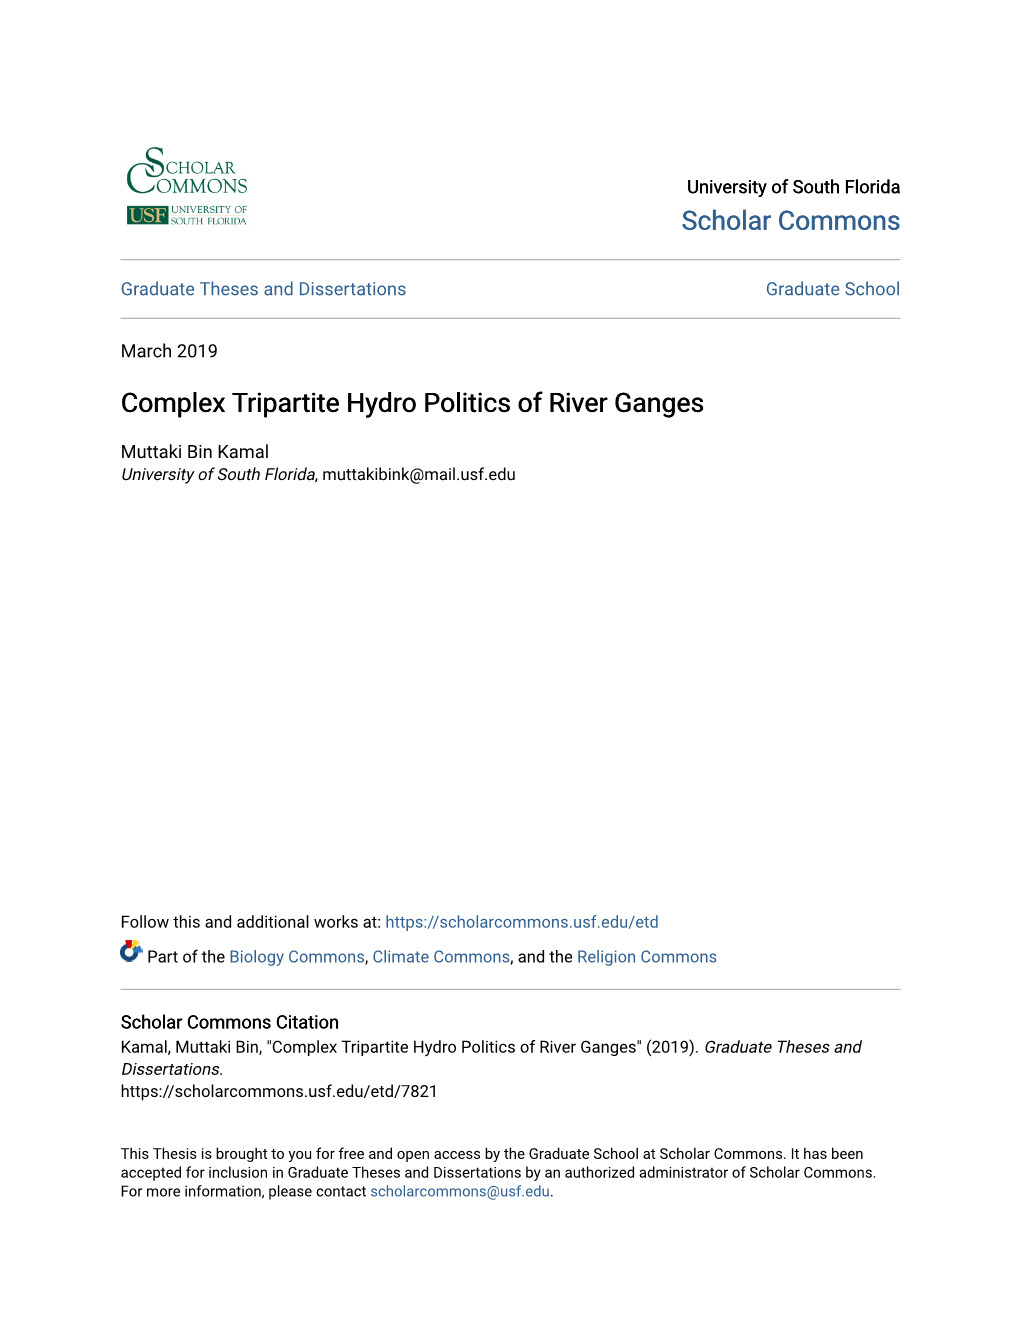 Complex Tripartite Hydro Politics of River Ganges